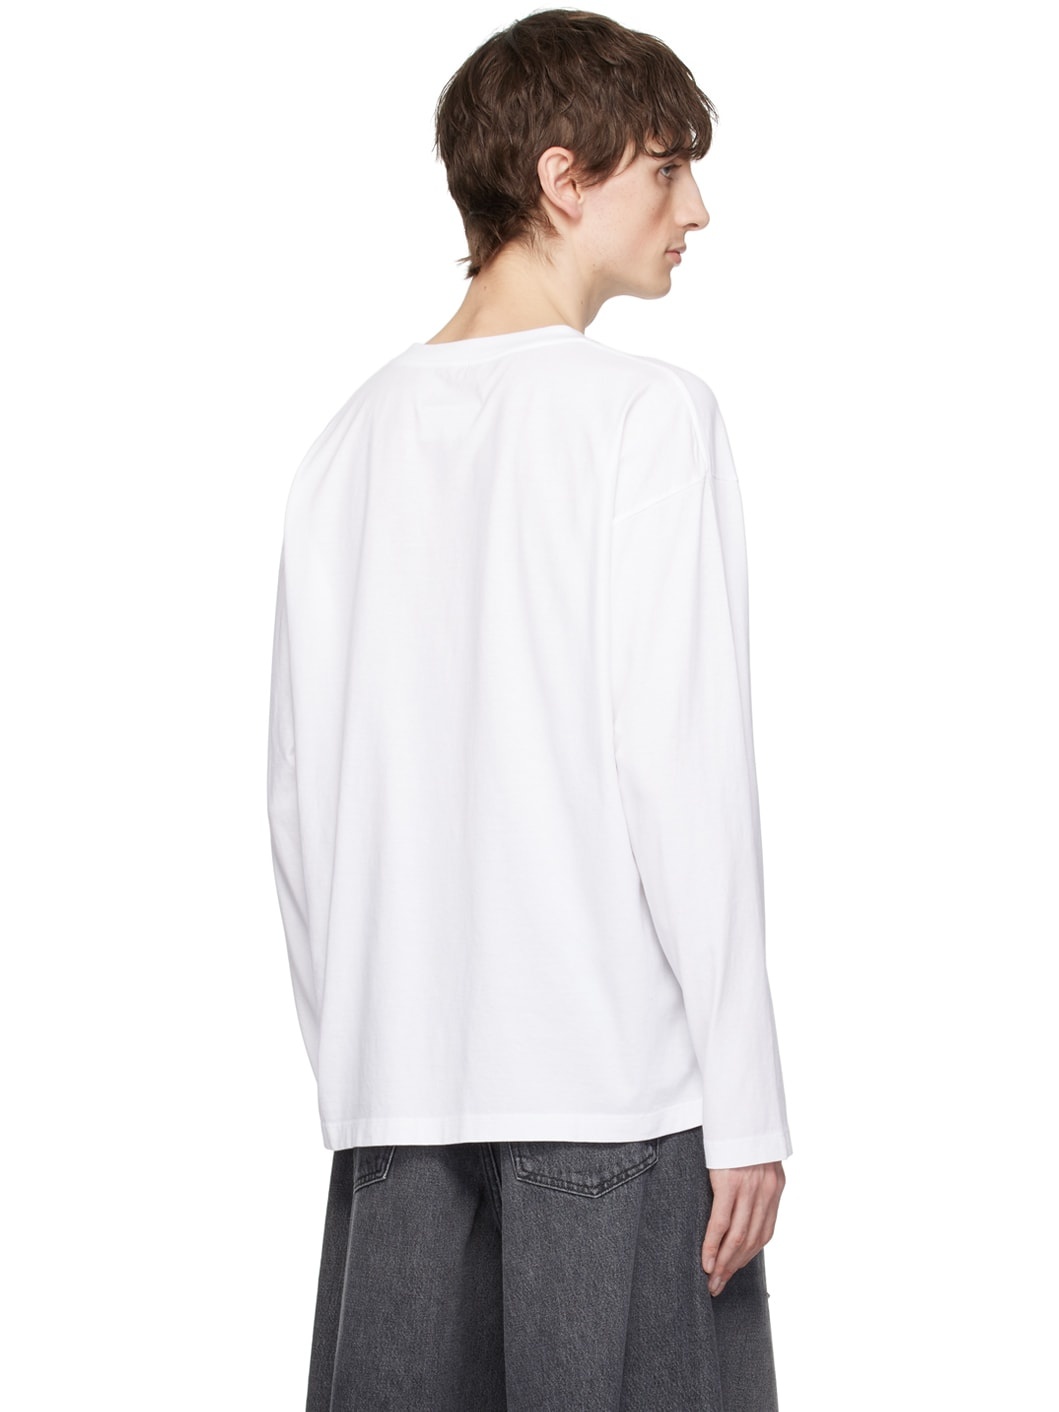 White Rasterised Zip Long Sleeve T-Shirt - 3